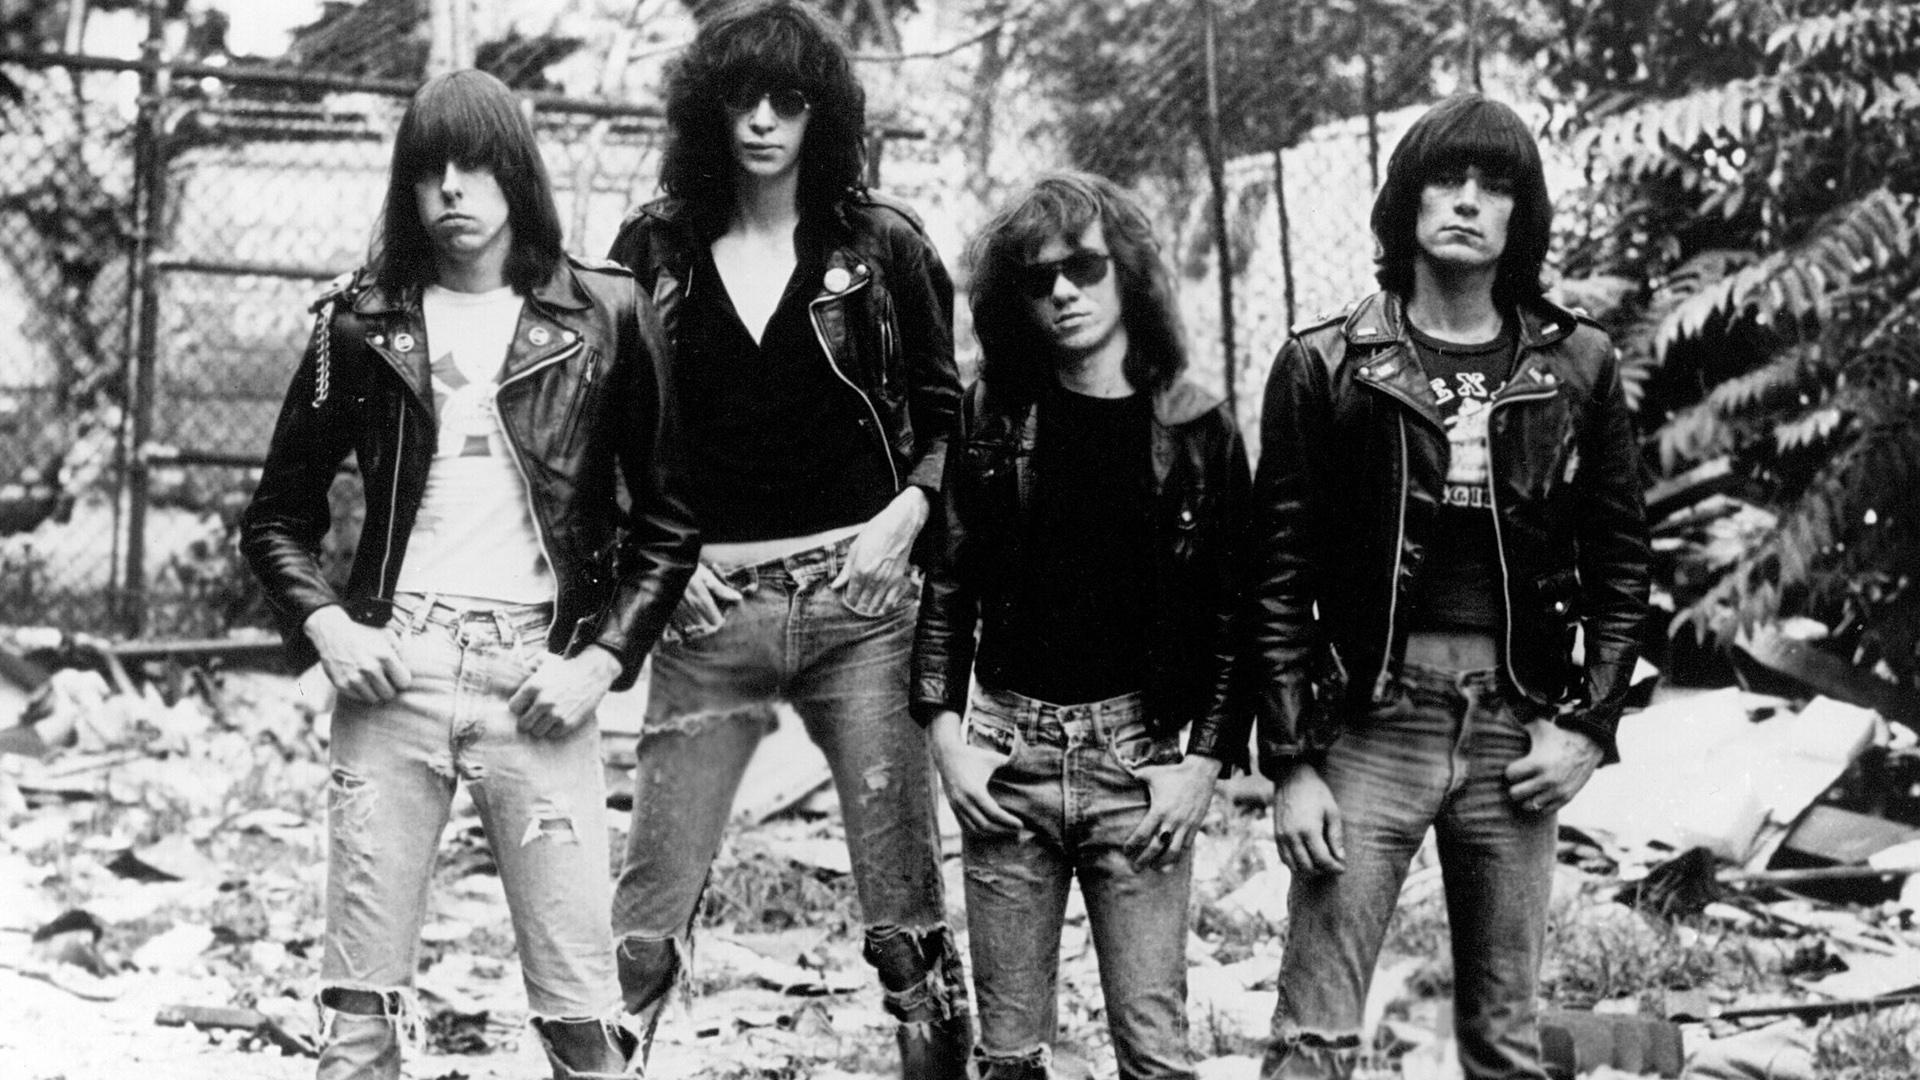 Ramones Band, Best songs, SheKnows poll, 1920x1080 Full HD Desktop